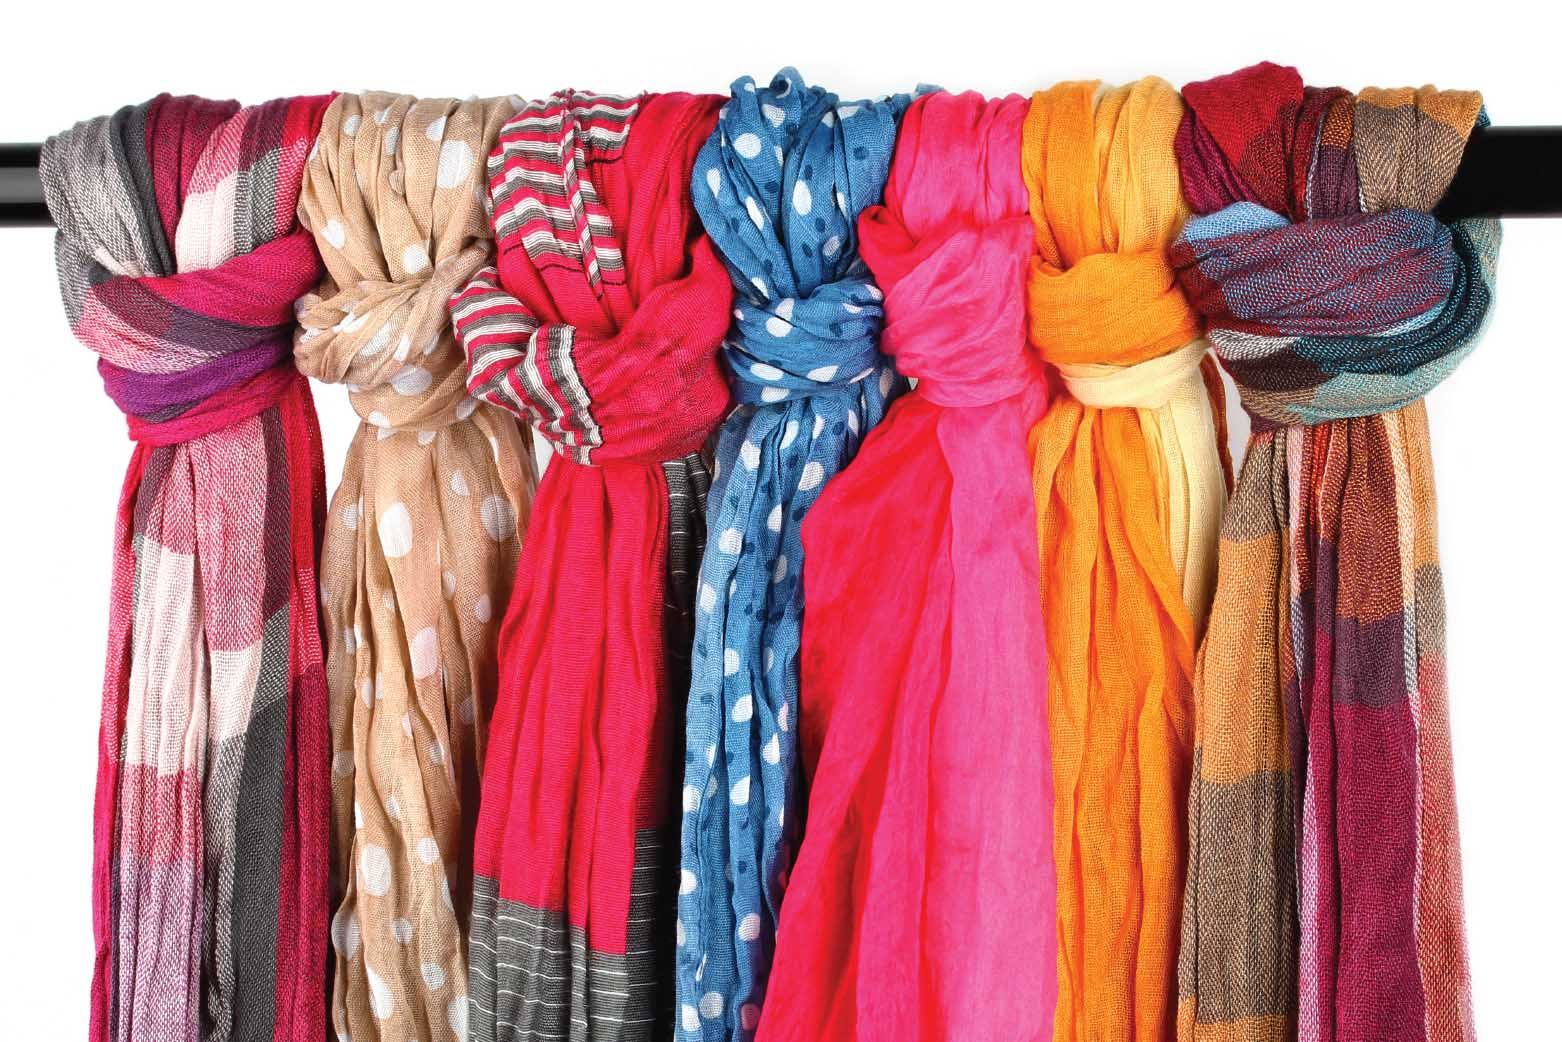 Winter wardrobe organisatin_scarves on a rod